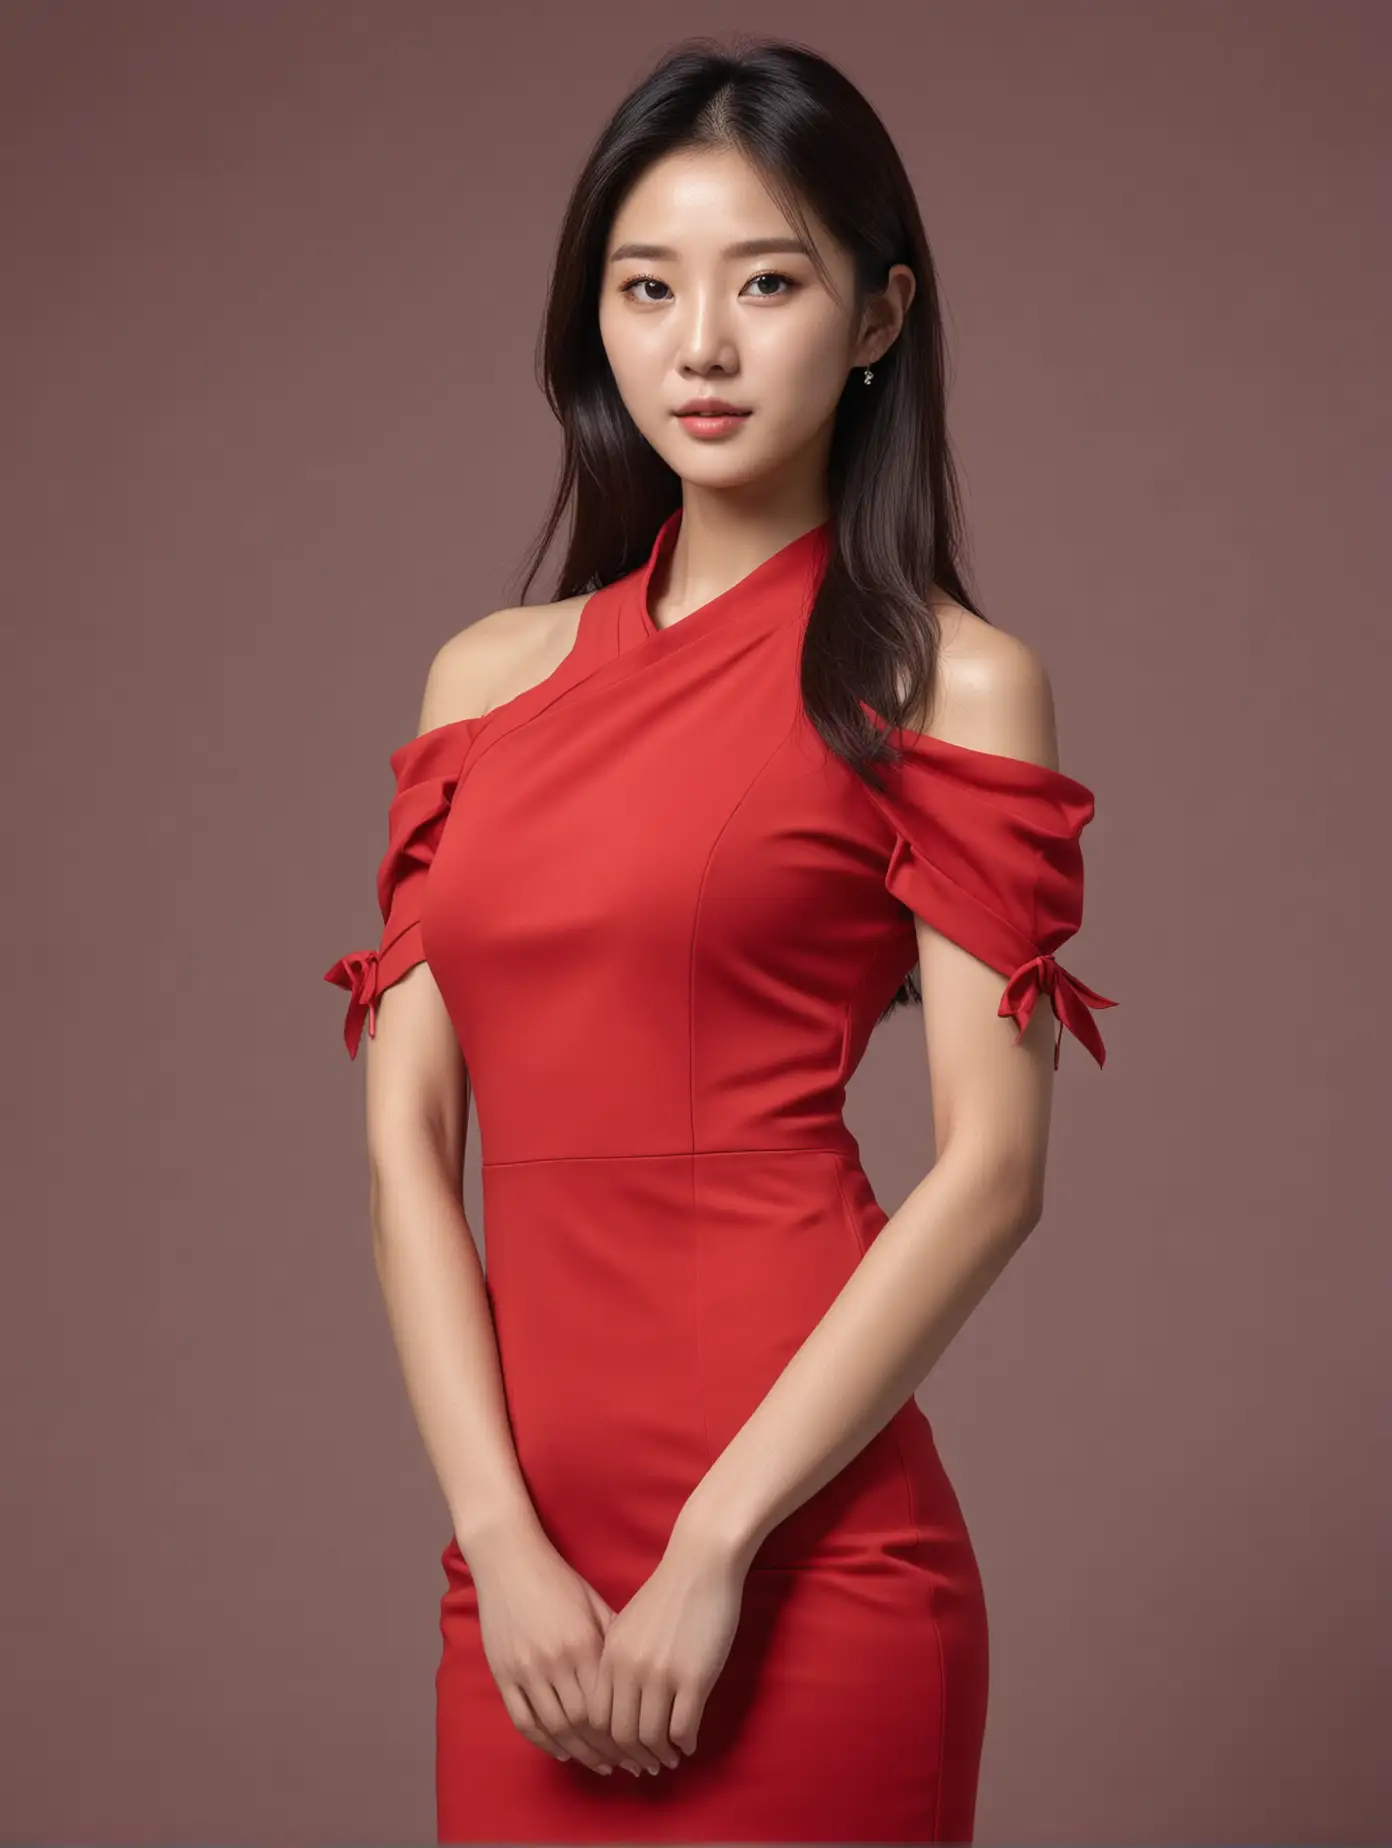 Elegant Korean Woman in Vibrant Red Dress Against Minimalist Backdrop